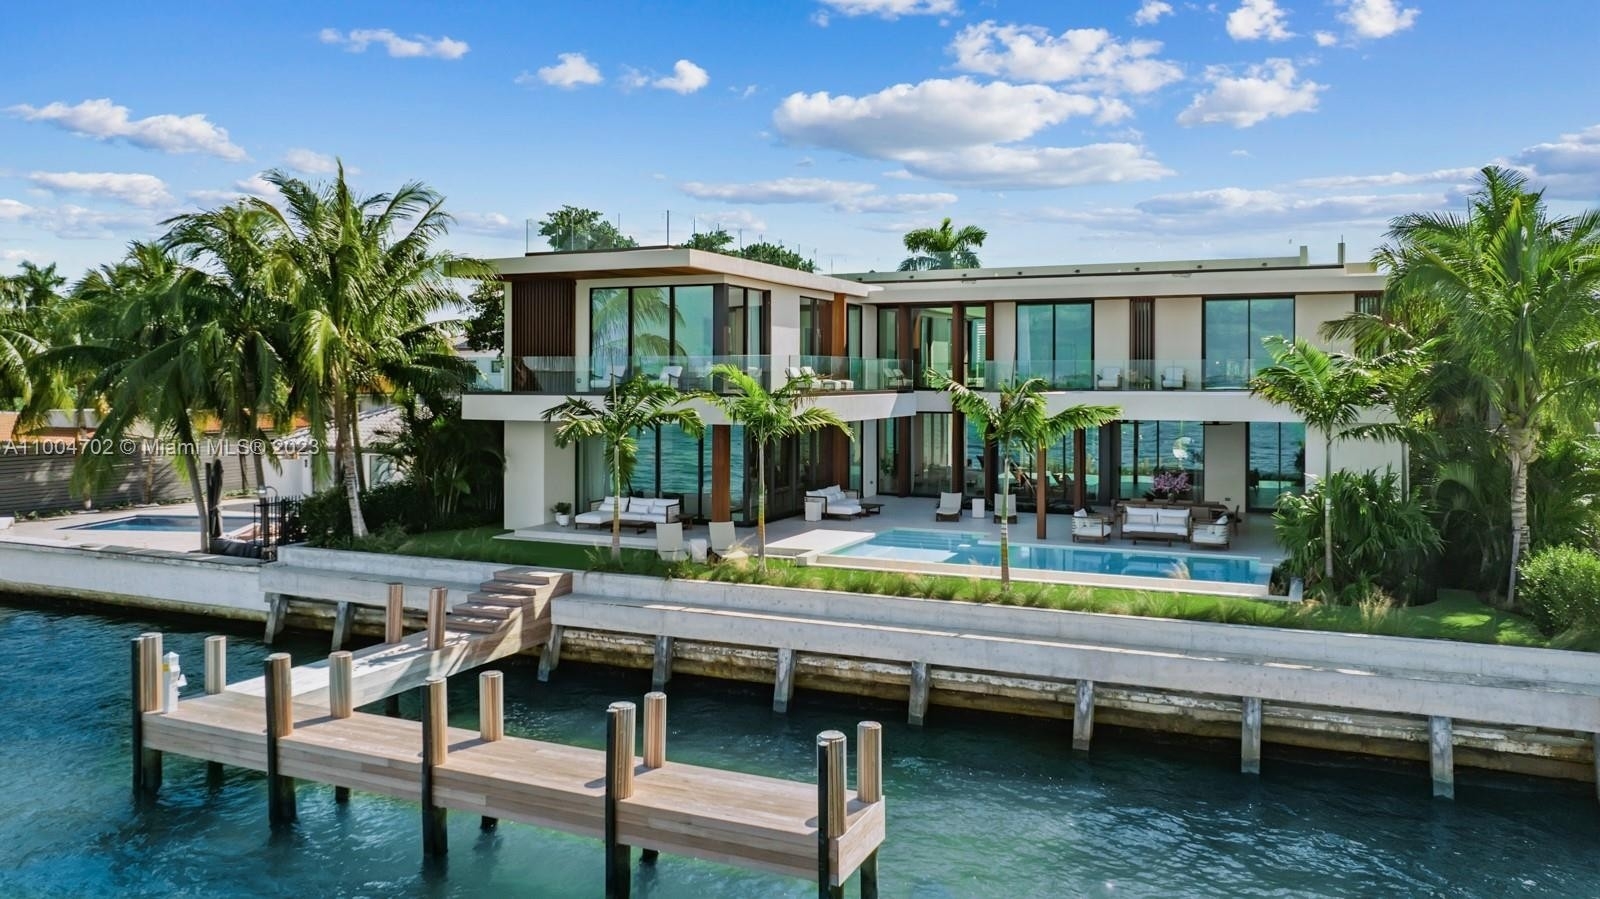 Single Family Home for Sale at Venetian Islands, Miami, FL 33139